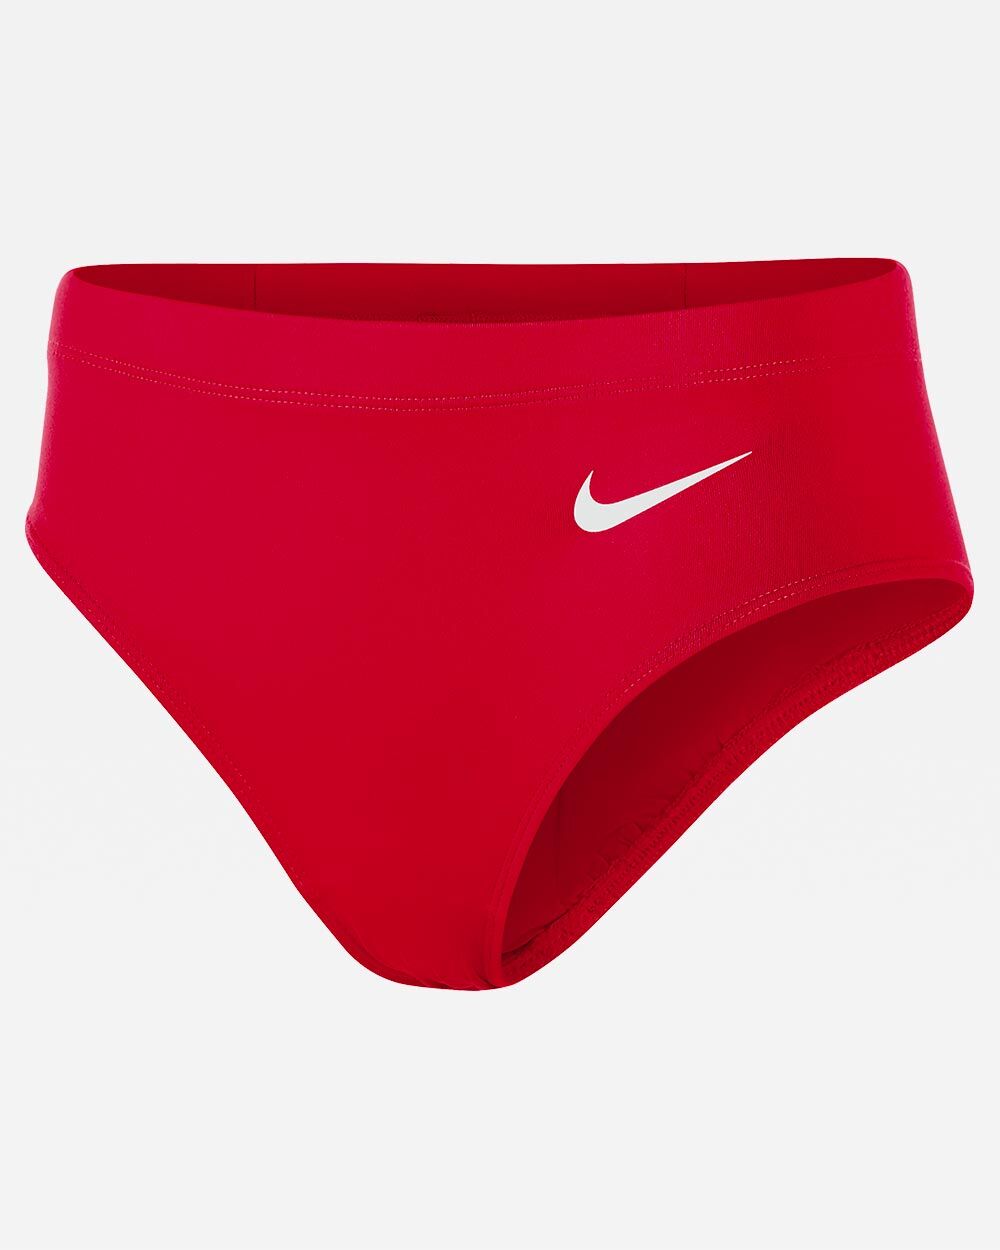 Bragas de running Nike Stock Rojo Mujeres - NT0309-657